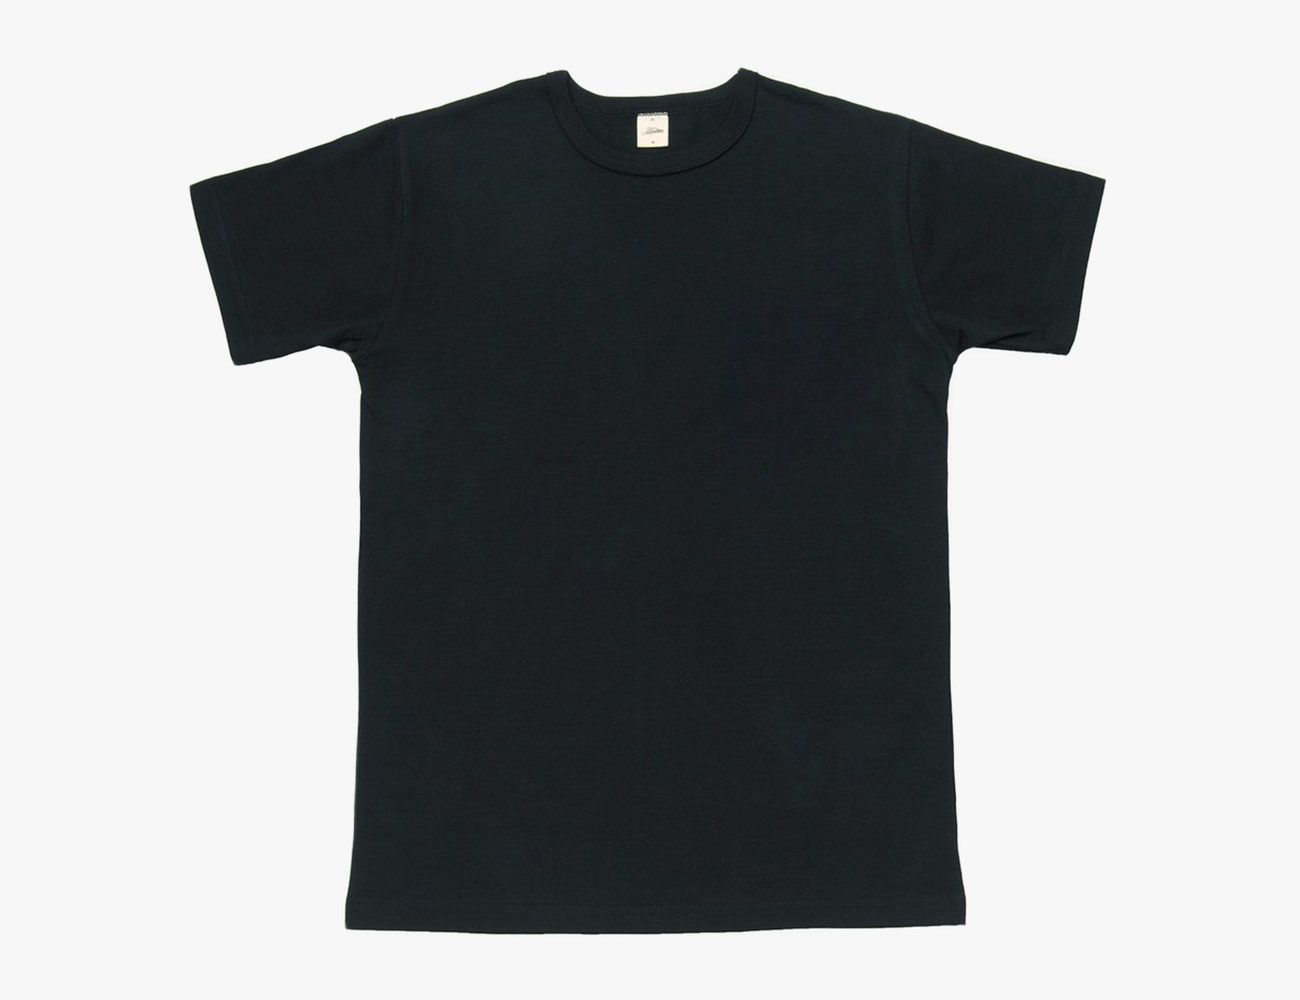 buy-black-print-on-black-t-shirt-off-68